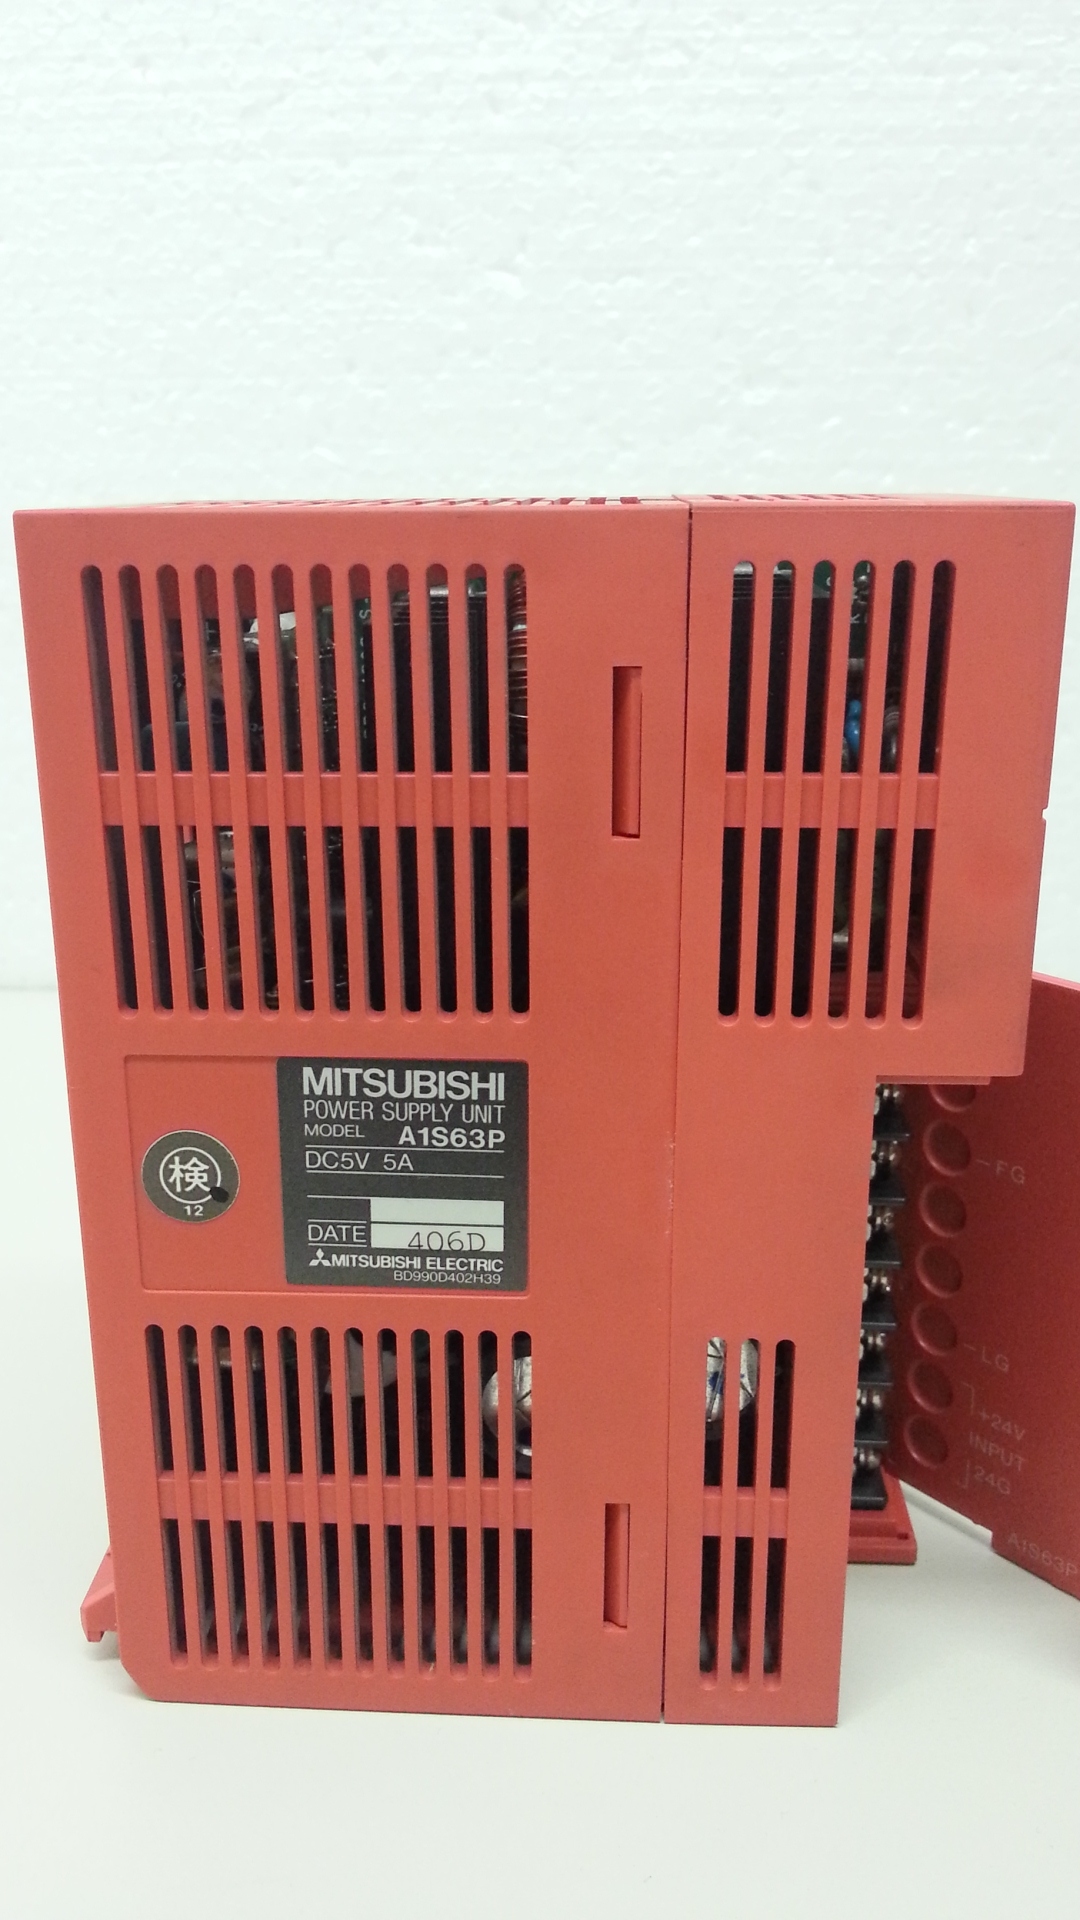 A1S63P Power supply unit melsec mitsubishi power